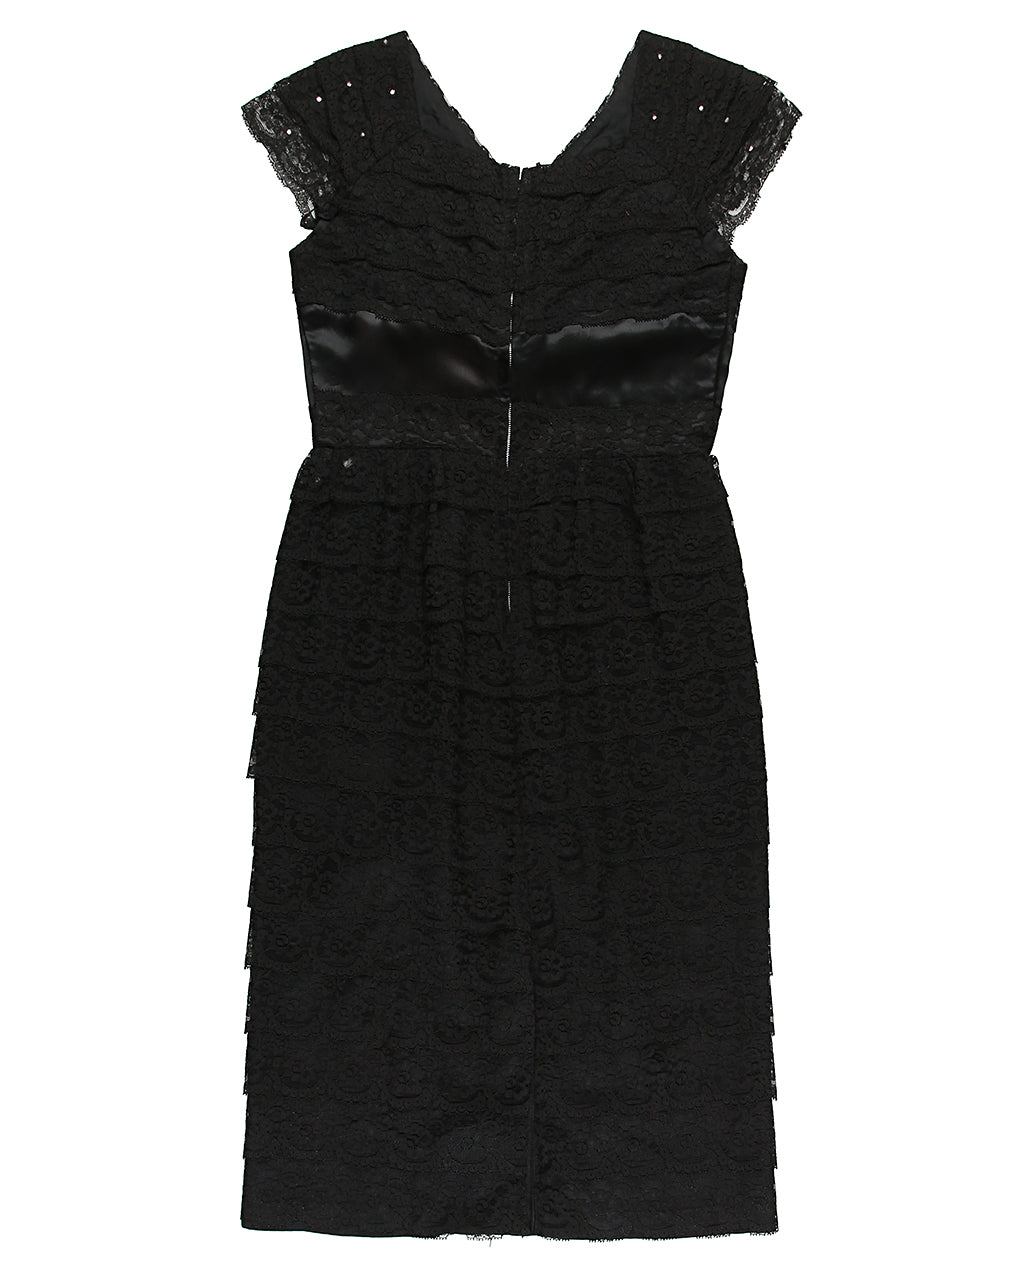 Vintage 50s Black Tiered Lace & Rhinestone Wiggle Dress - S